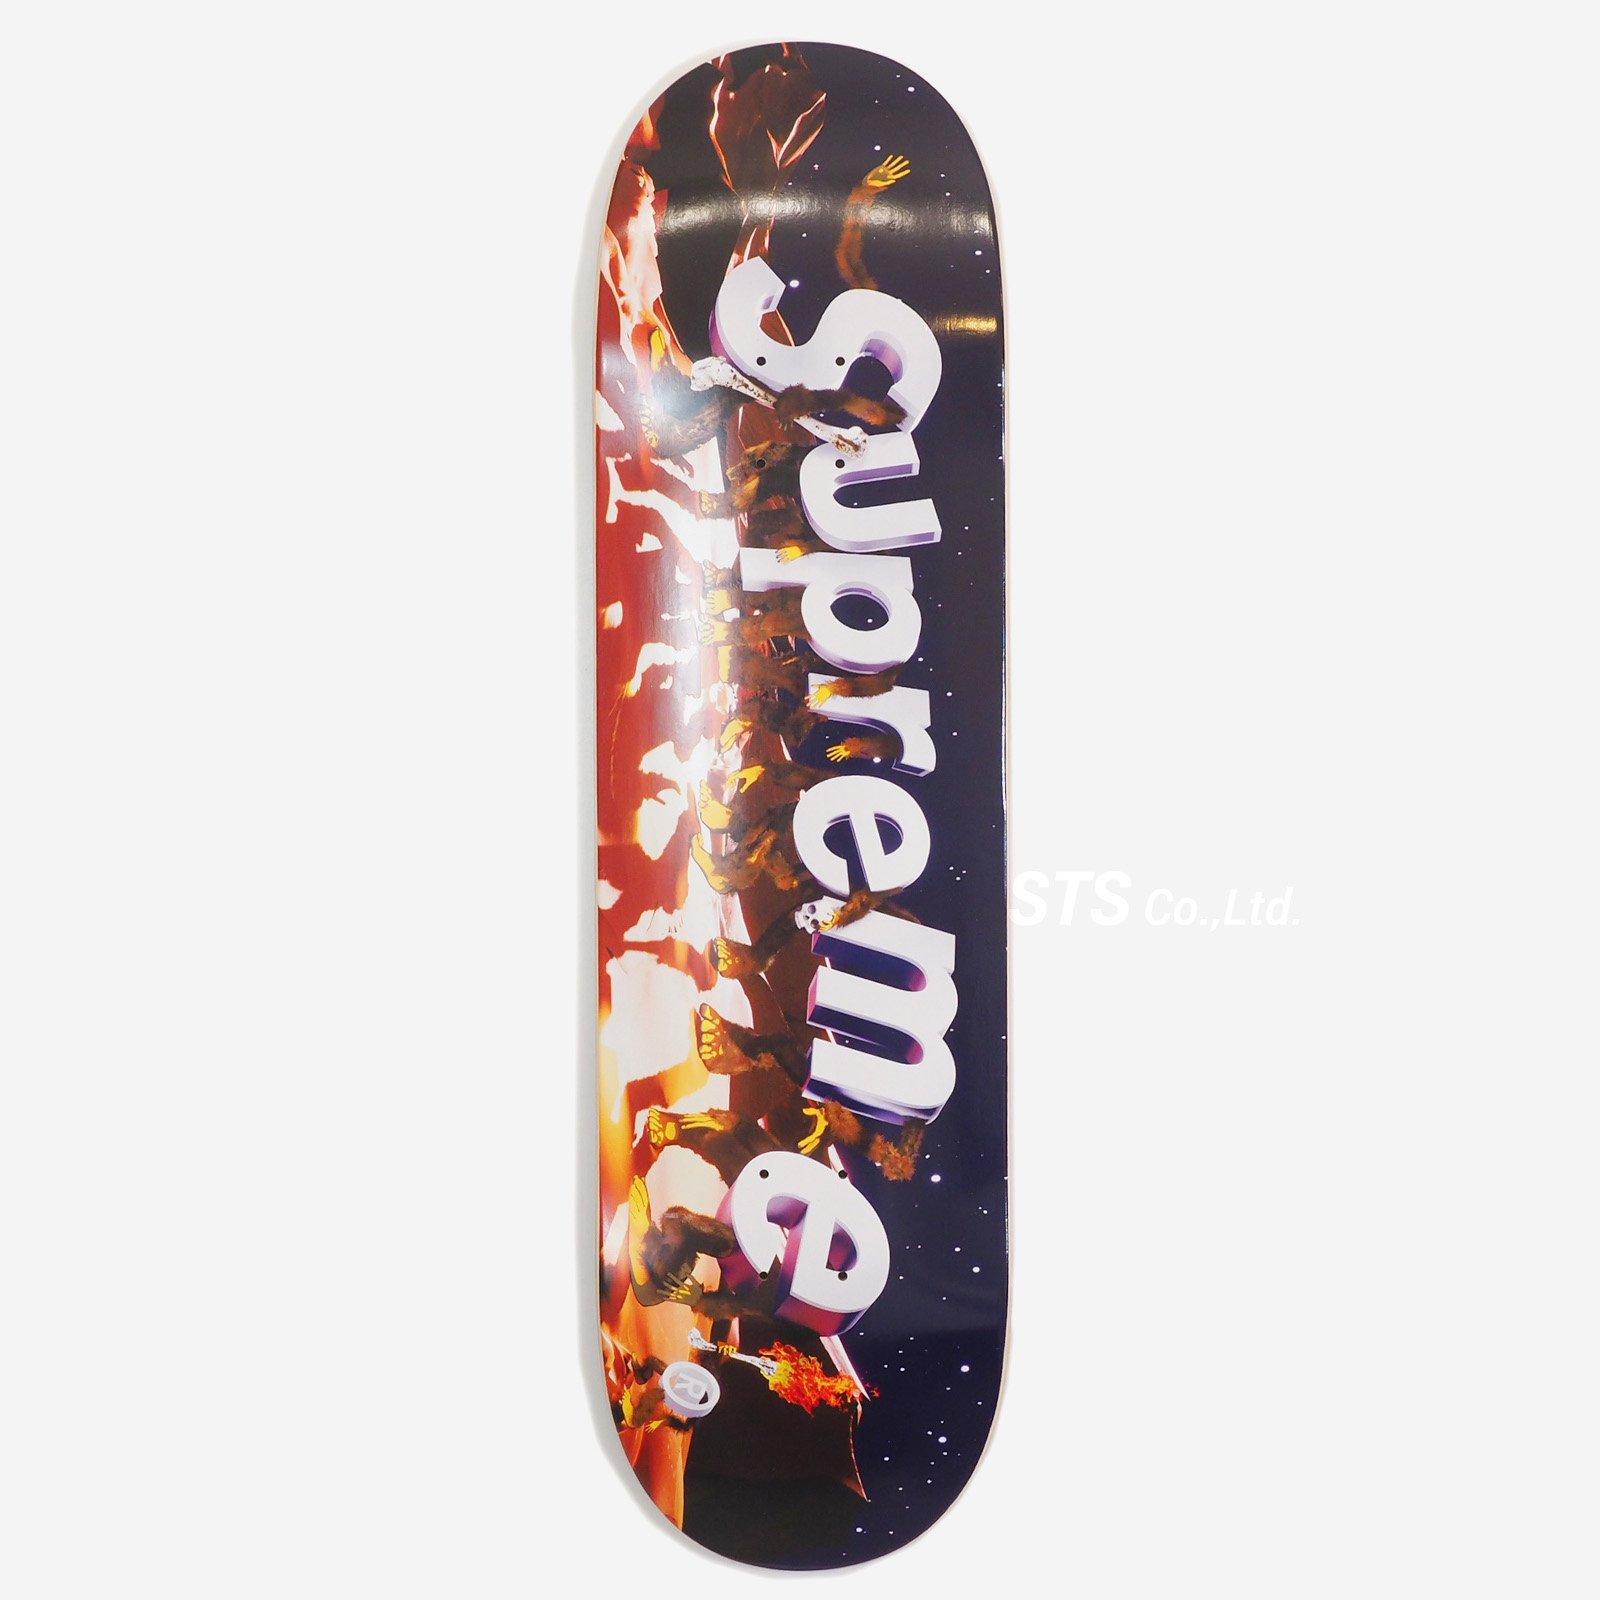 Supreme 21ss Apes Skateboard